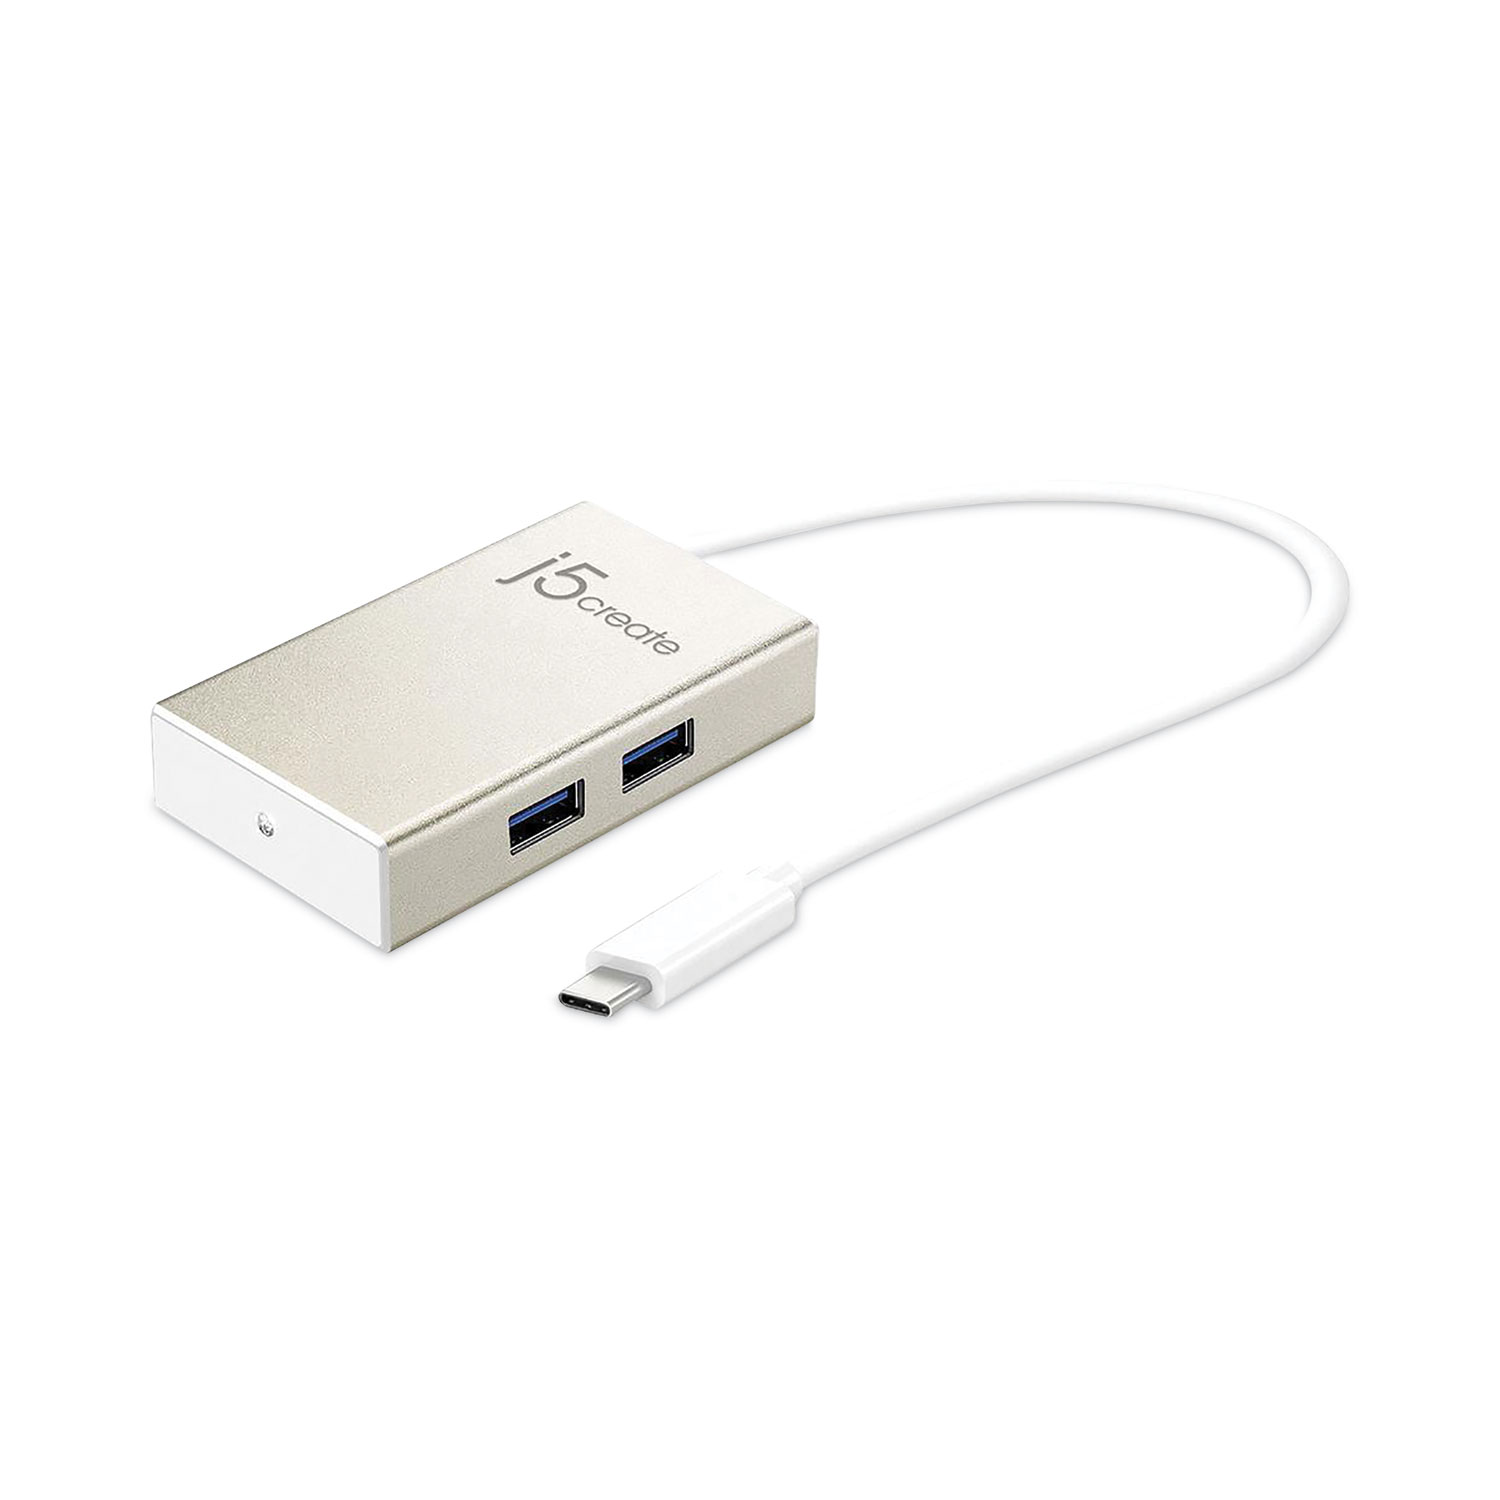 Customer Reviews: j5create 3-Port USB 3.0 Hub and HDMI Adapter